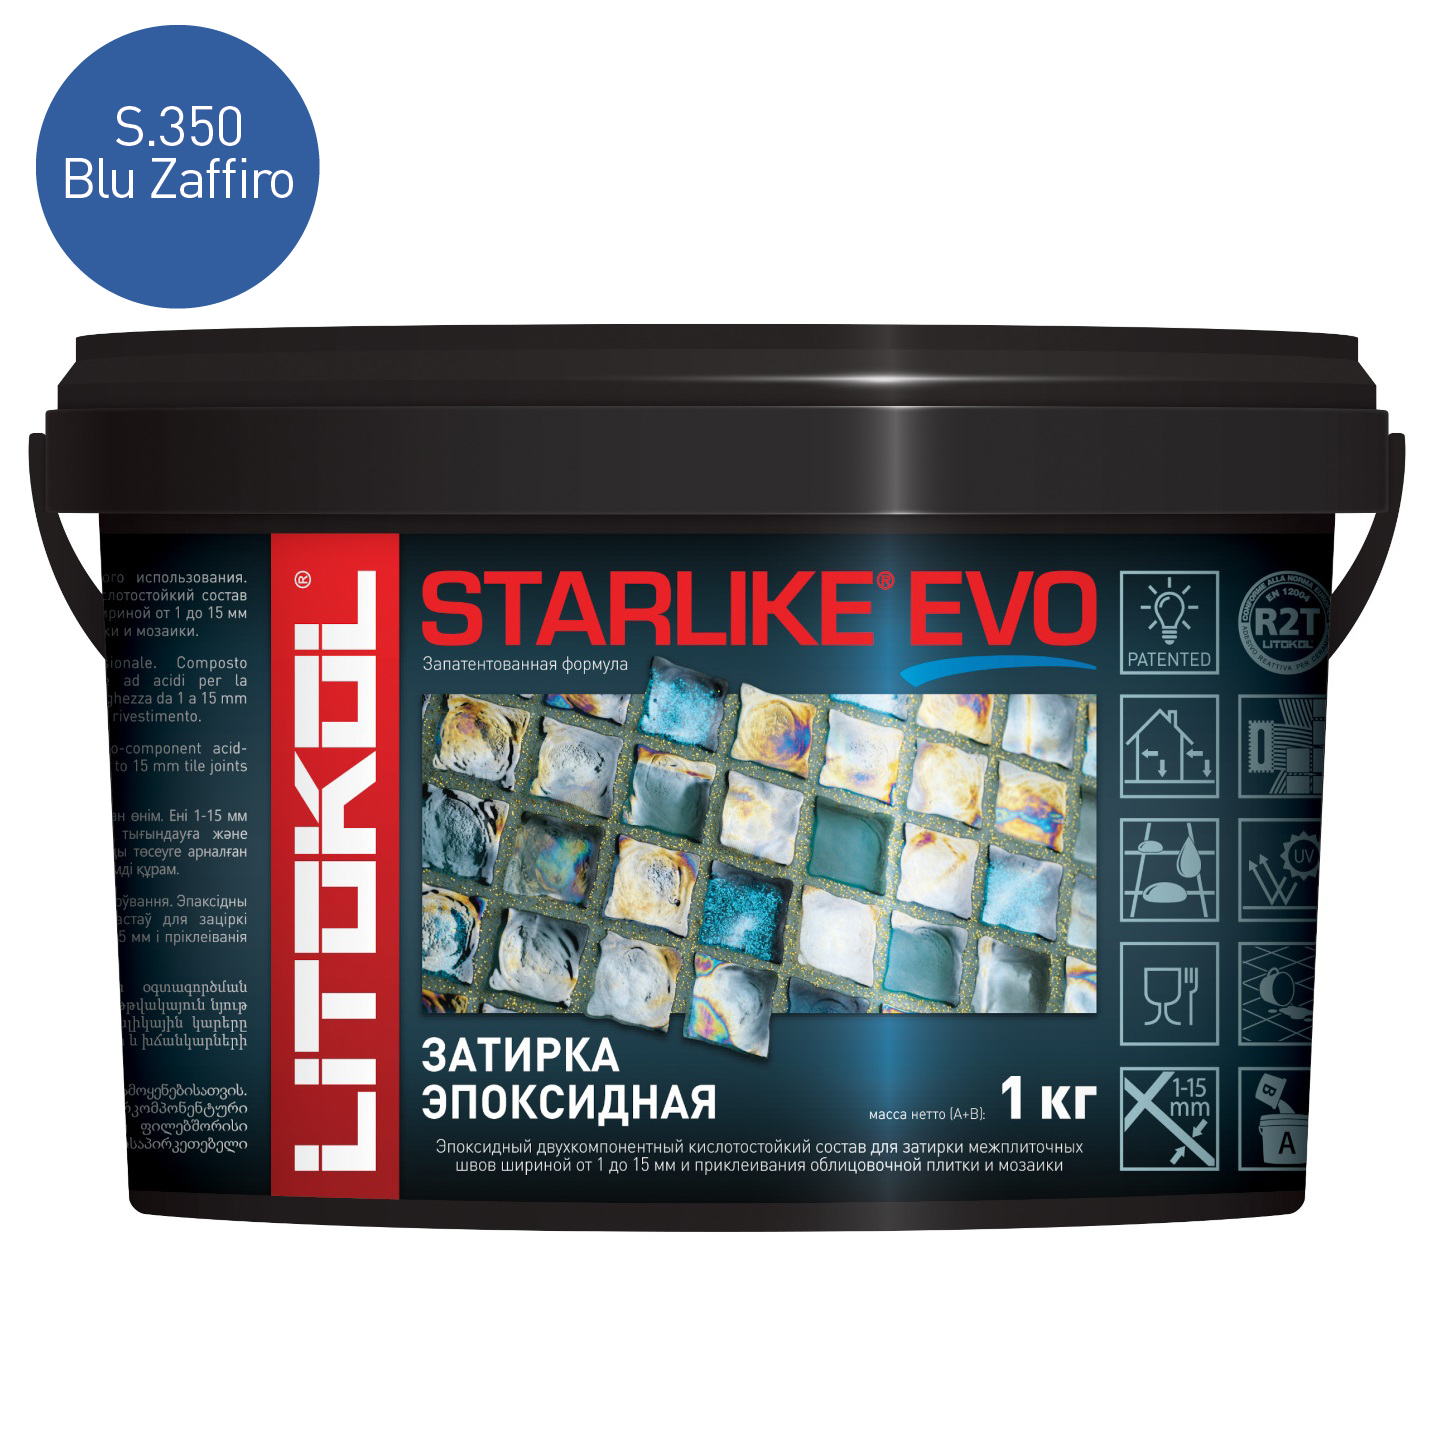 Затирка эпоксидная Litokol Starlike Evo S.350 Blu Zaffiro (1 кг.)